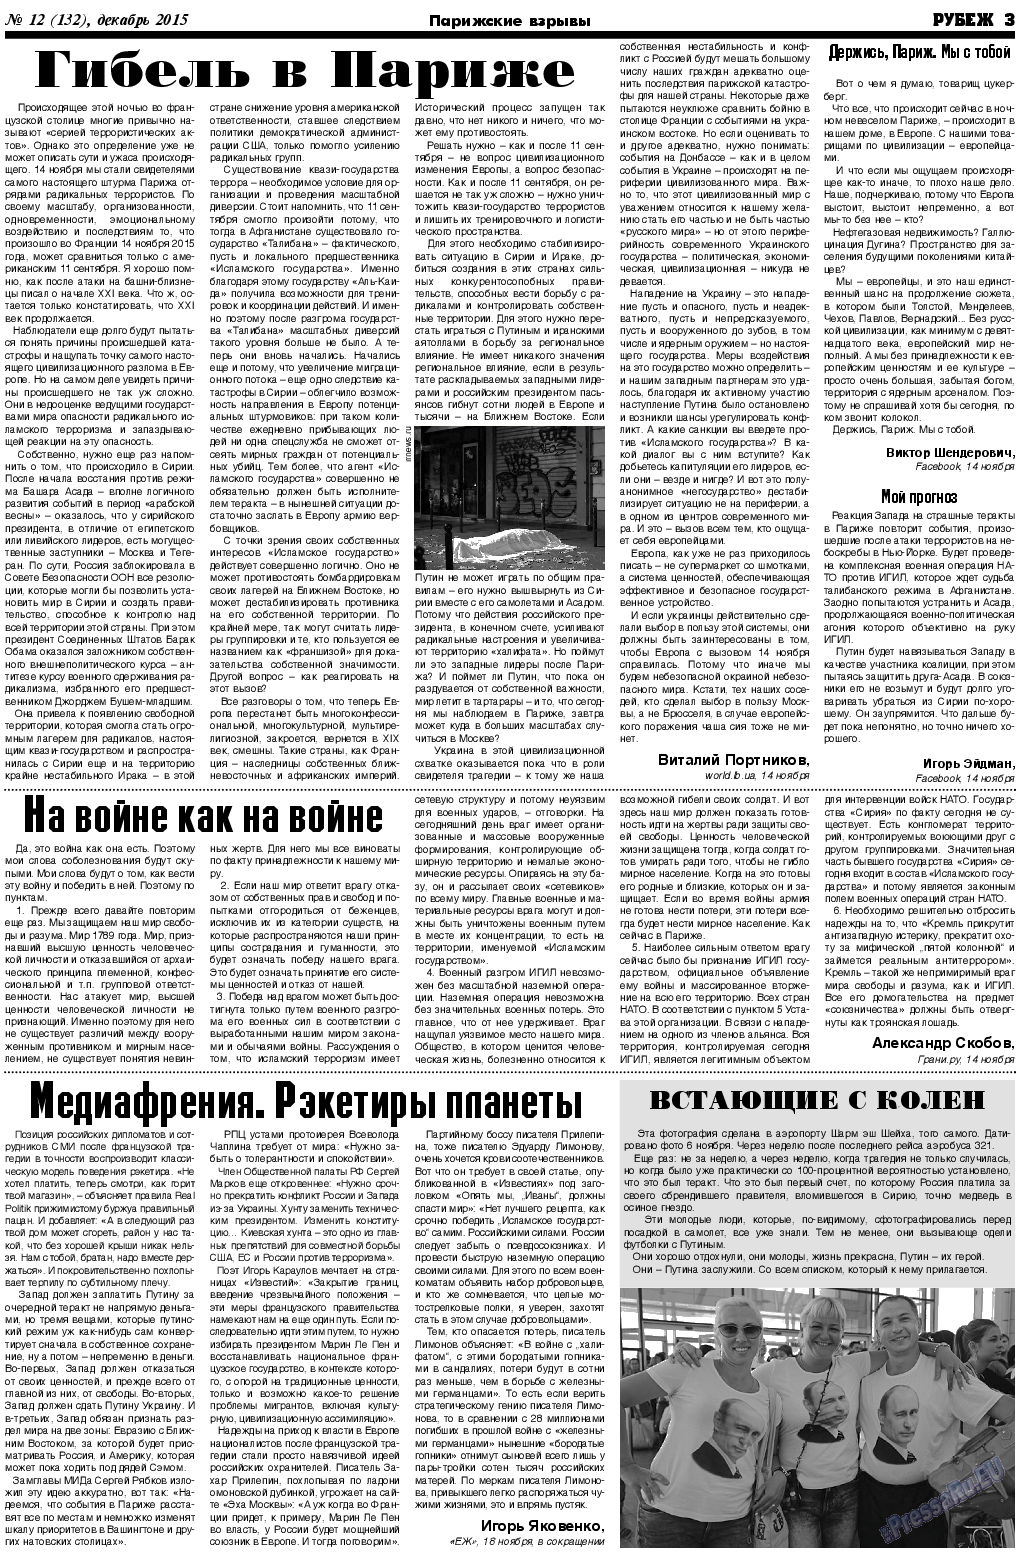 Рубеж, газета. 2015 №12 стр.3